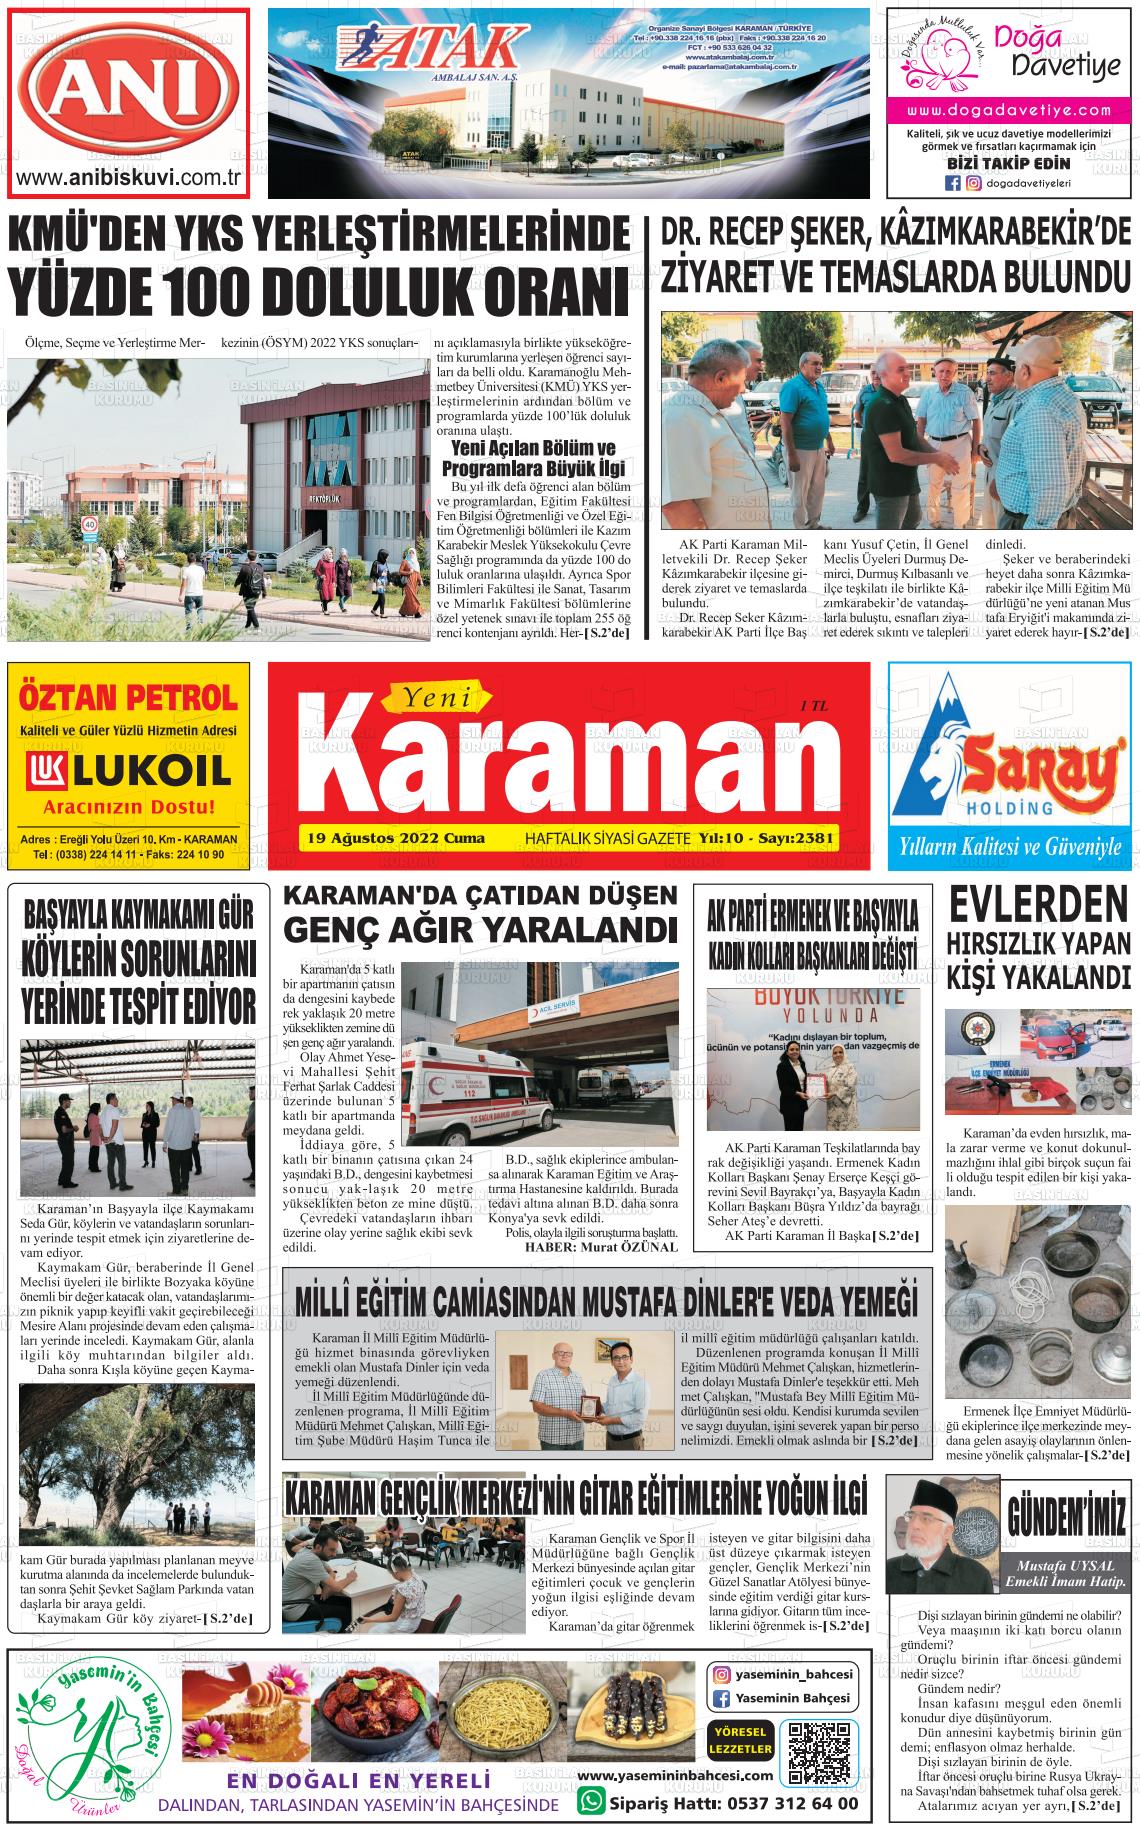 19 Ağustos 2022 Yeni Karaman Gazete Manşeti